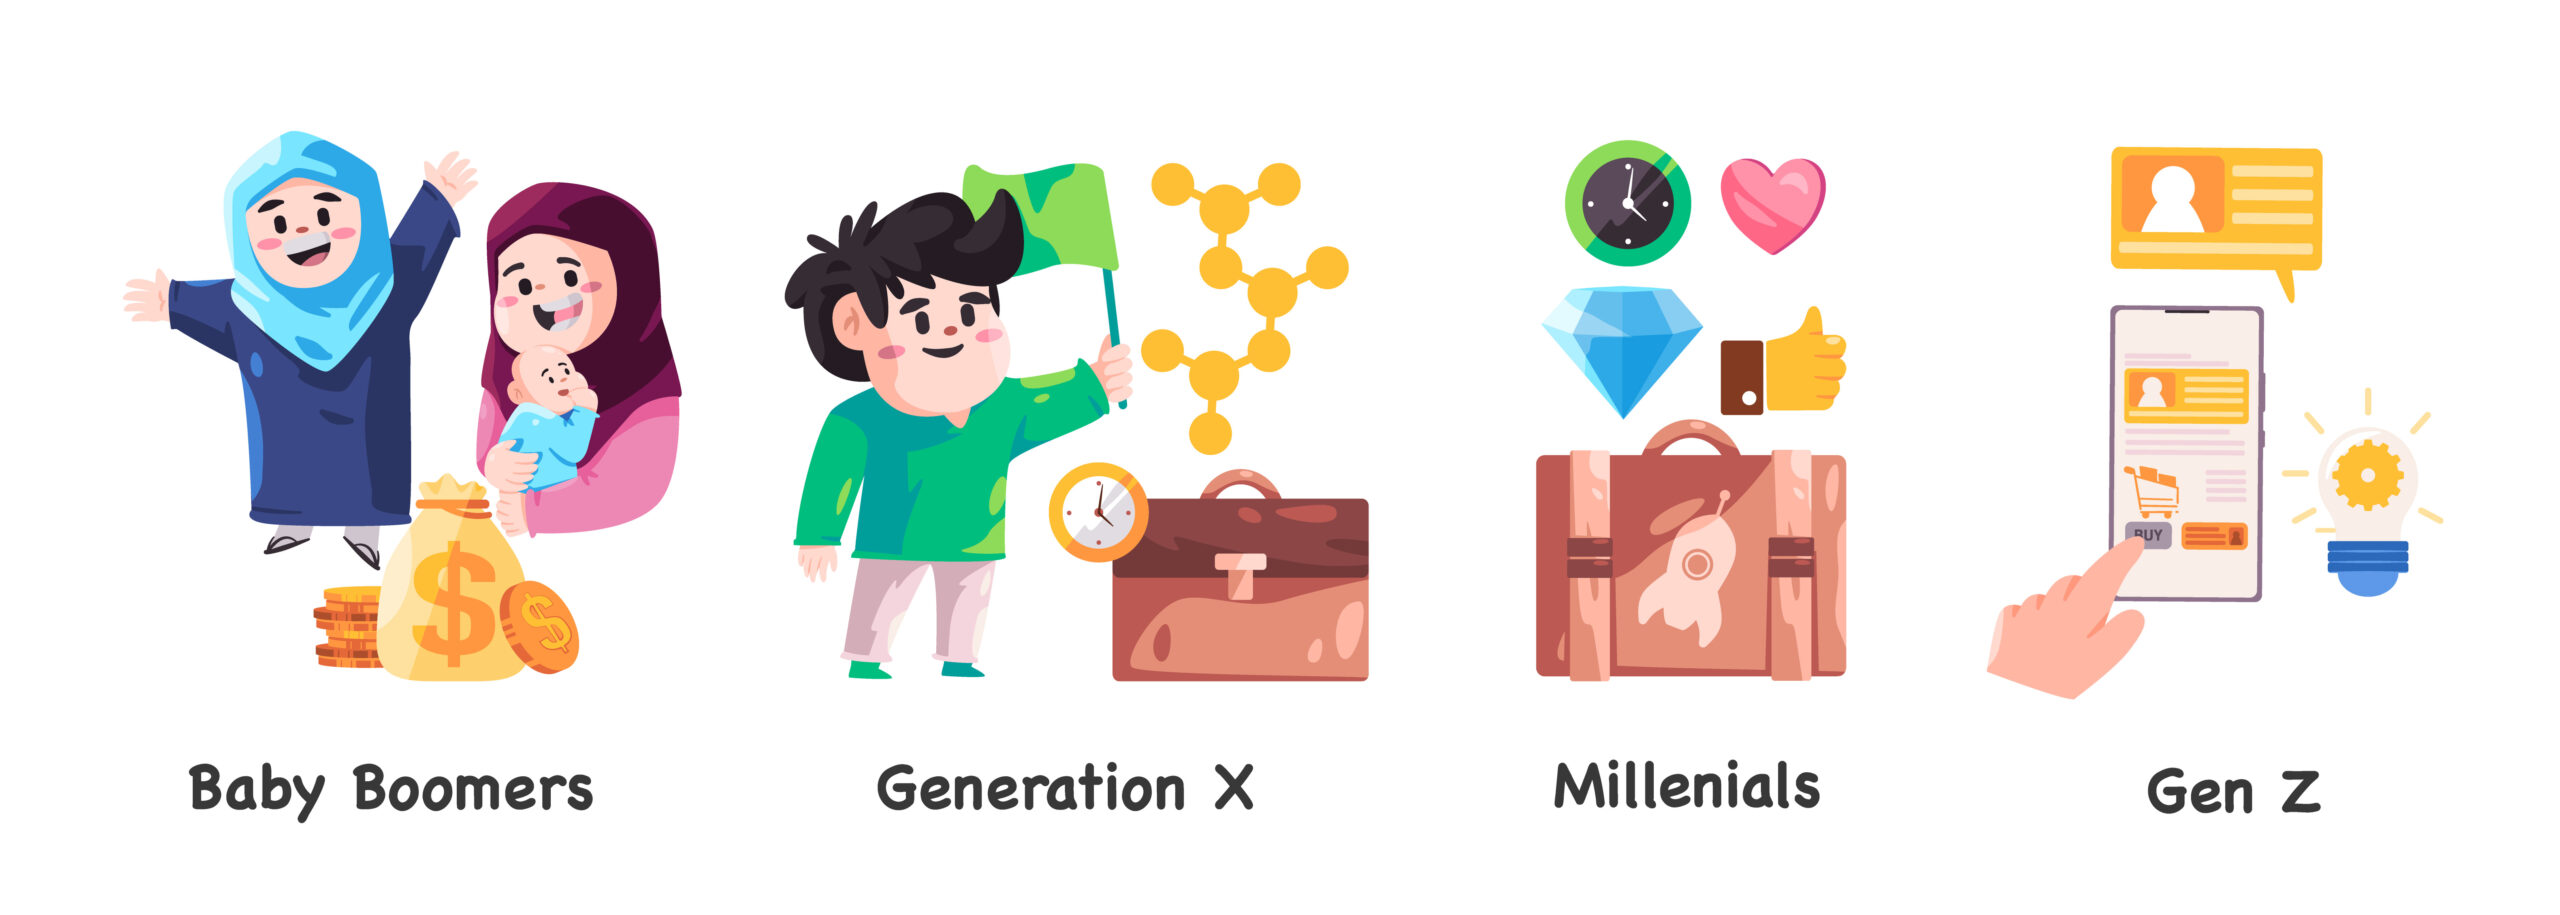 Generation concept from gen z y x millenials to baby boomers vector